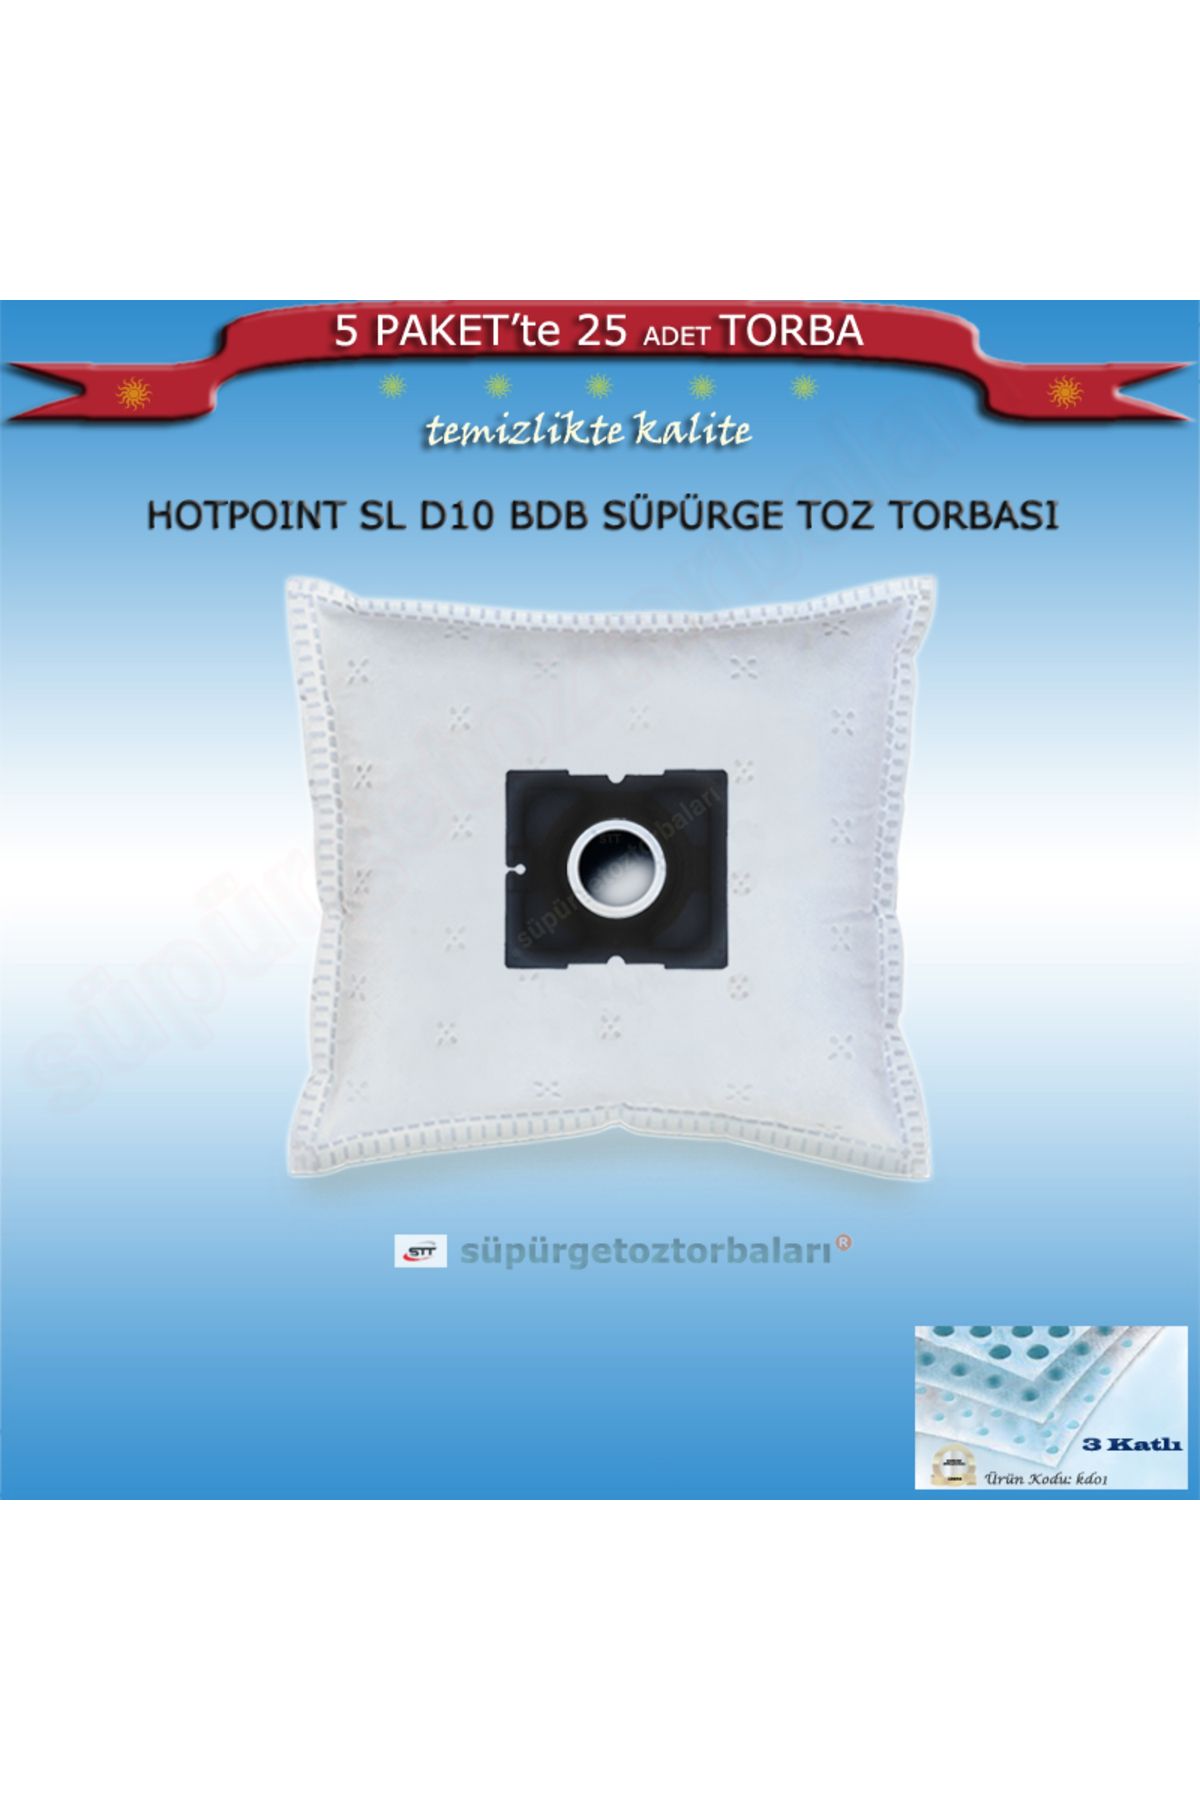 Hotpoint Sl D10 Bdb Süpürge Toz Torbası 25 Adet Torba Kd01